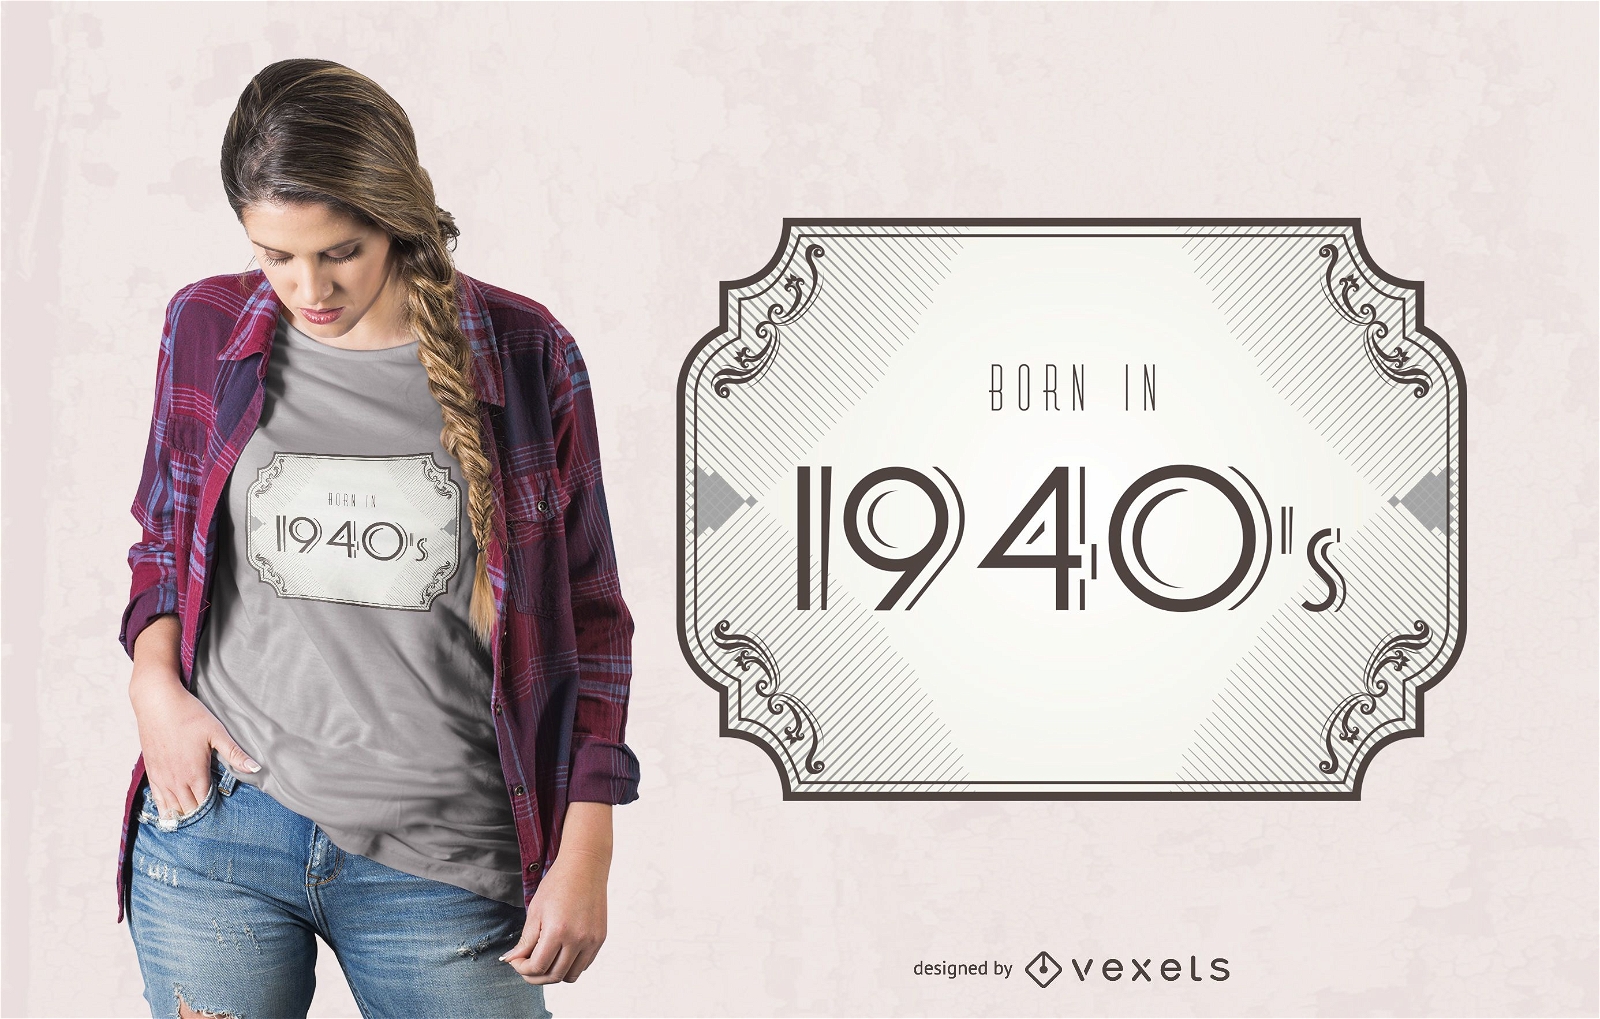 Born In 1940s T-shirt Design